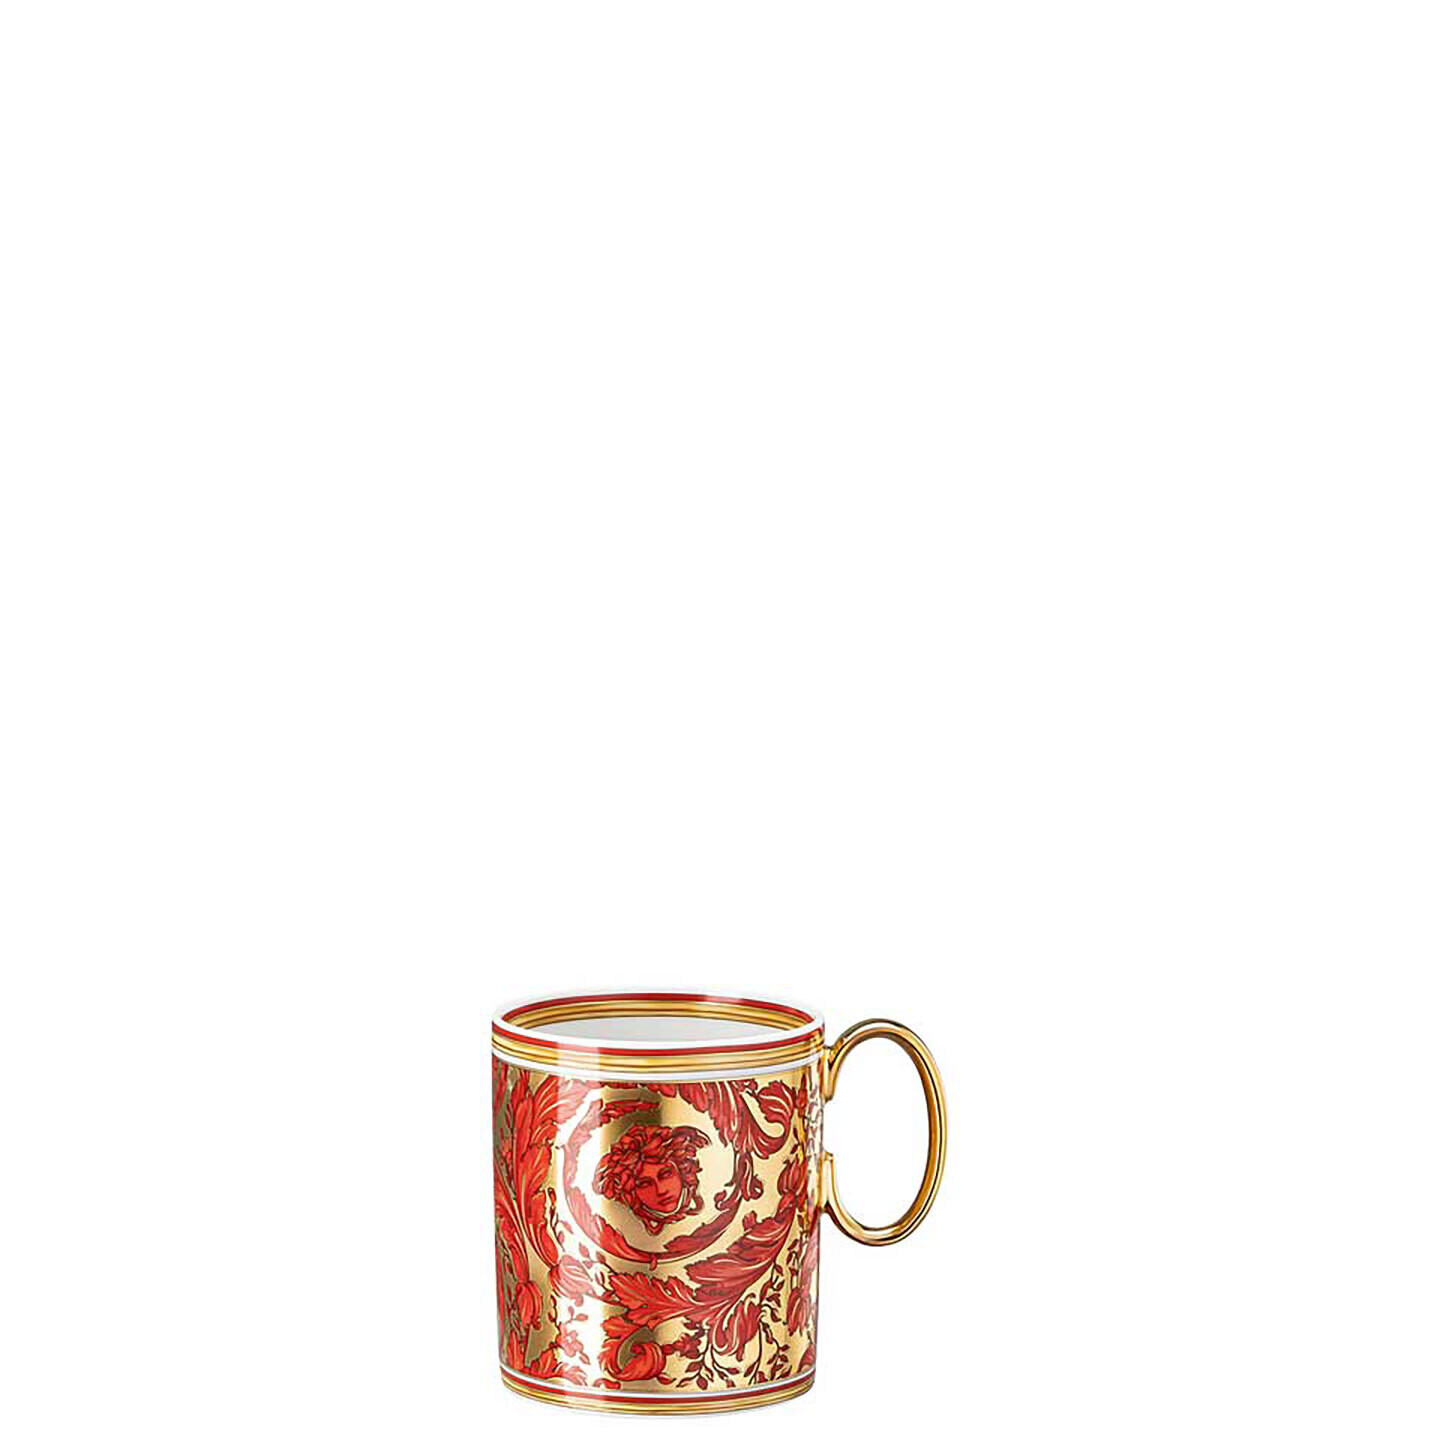 Versace Medusa Garland Red Mug 19335-409958-15505